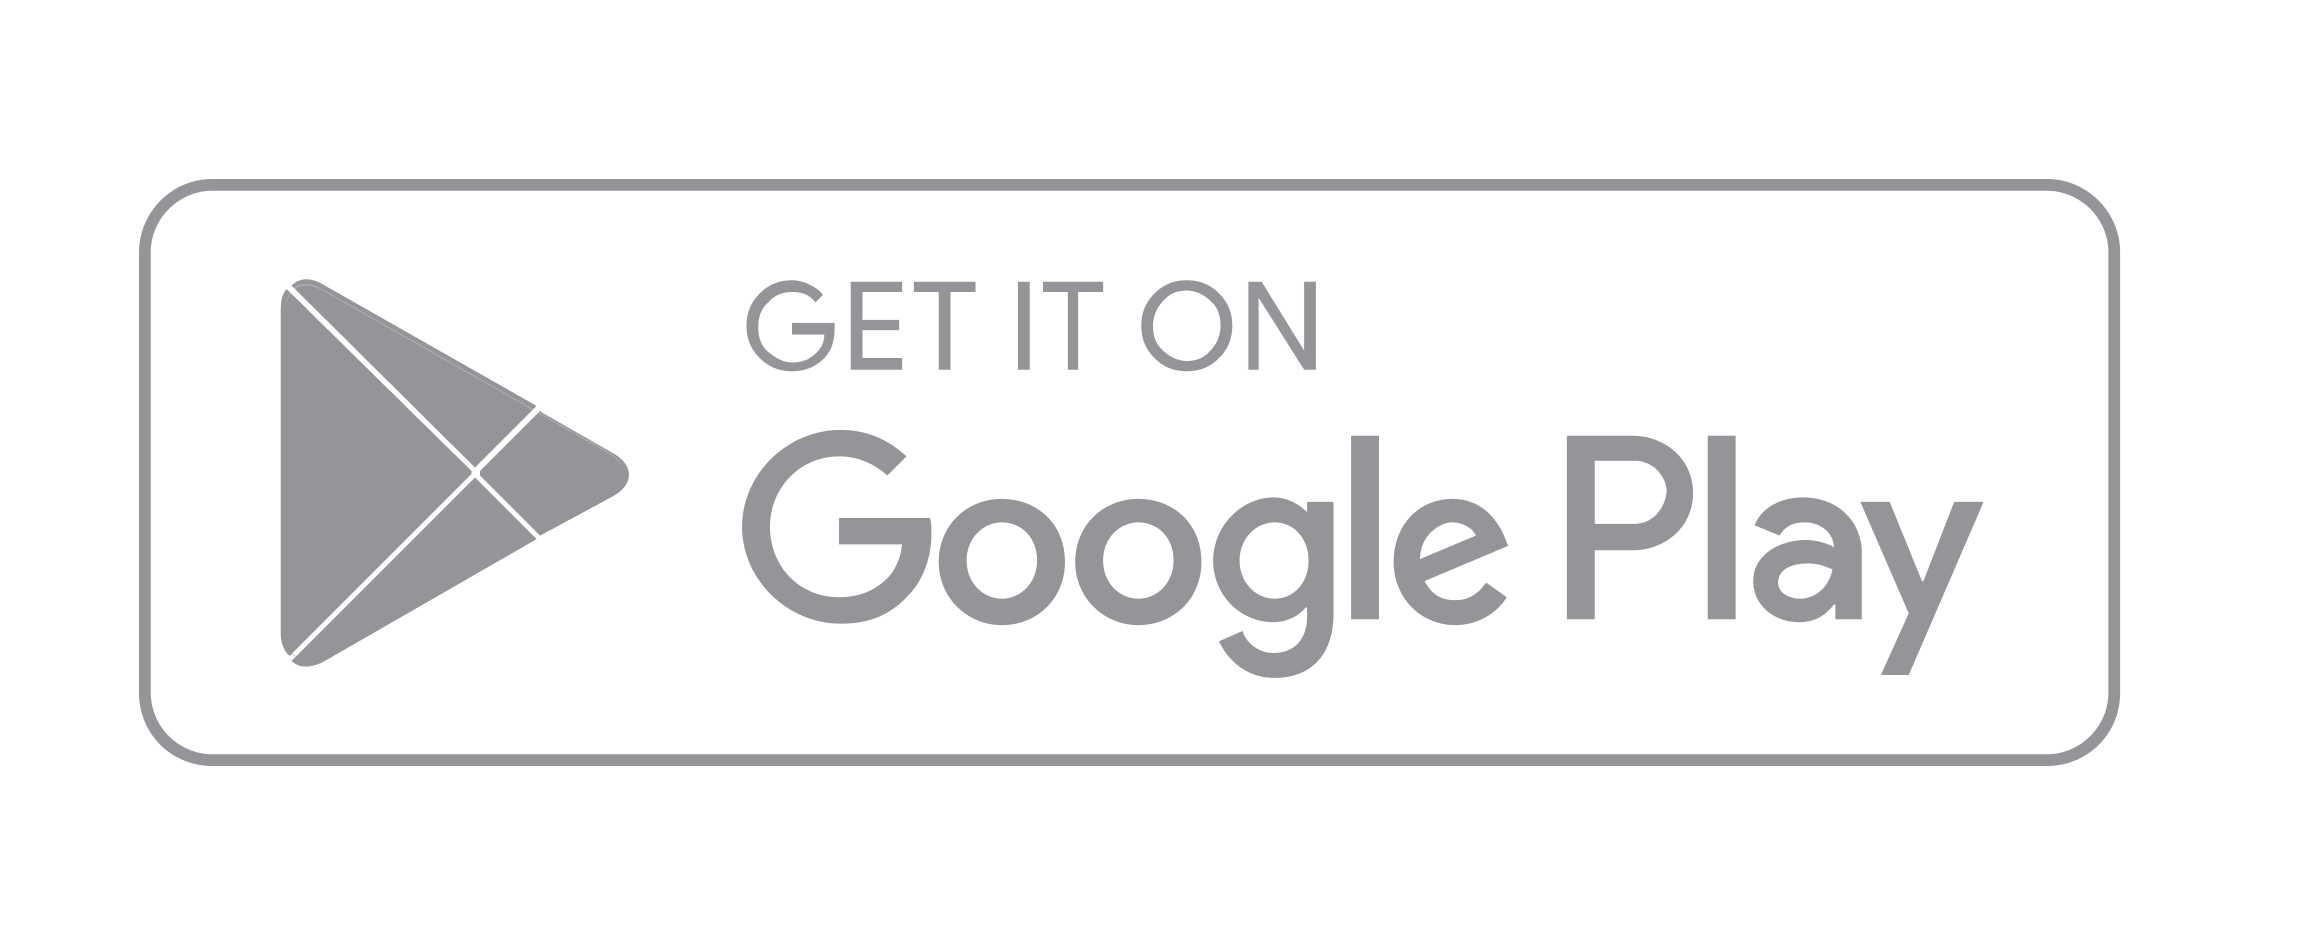 Google play 21. Гугл плей. Google Play logo. Get in Google Play. Доступно в Play Market.